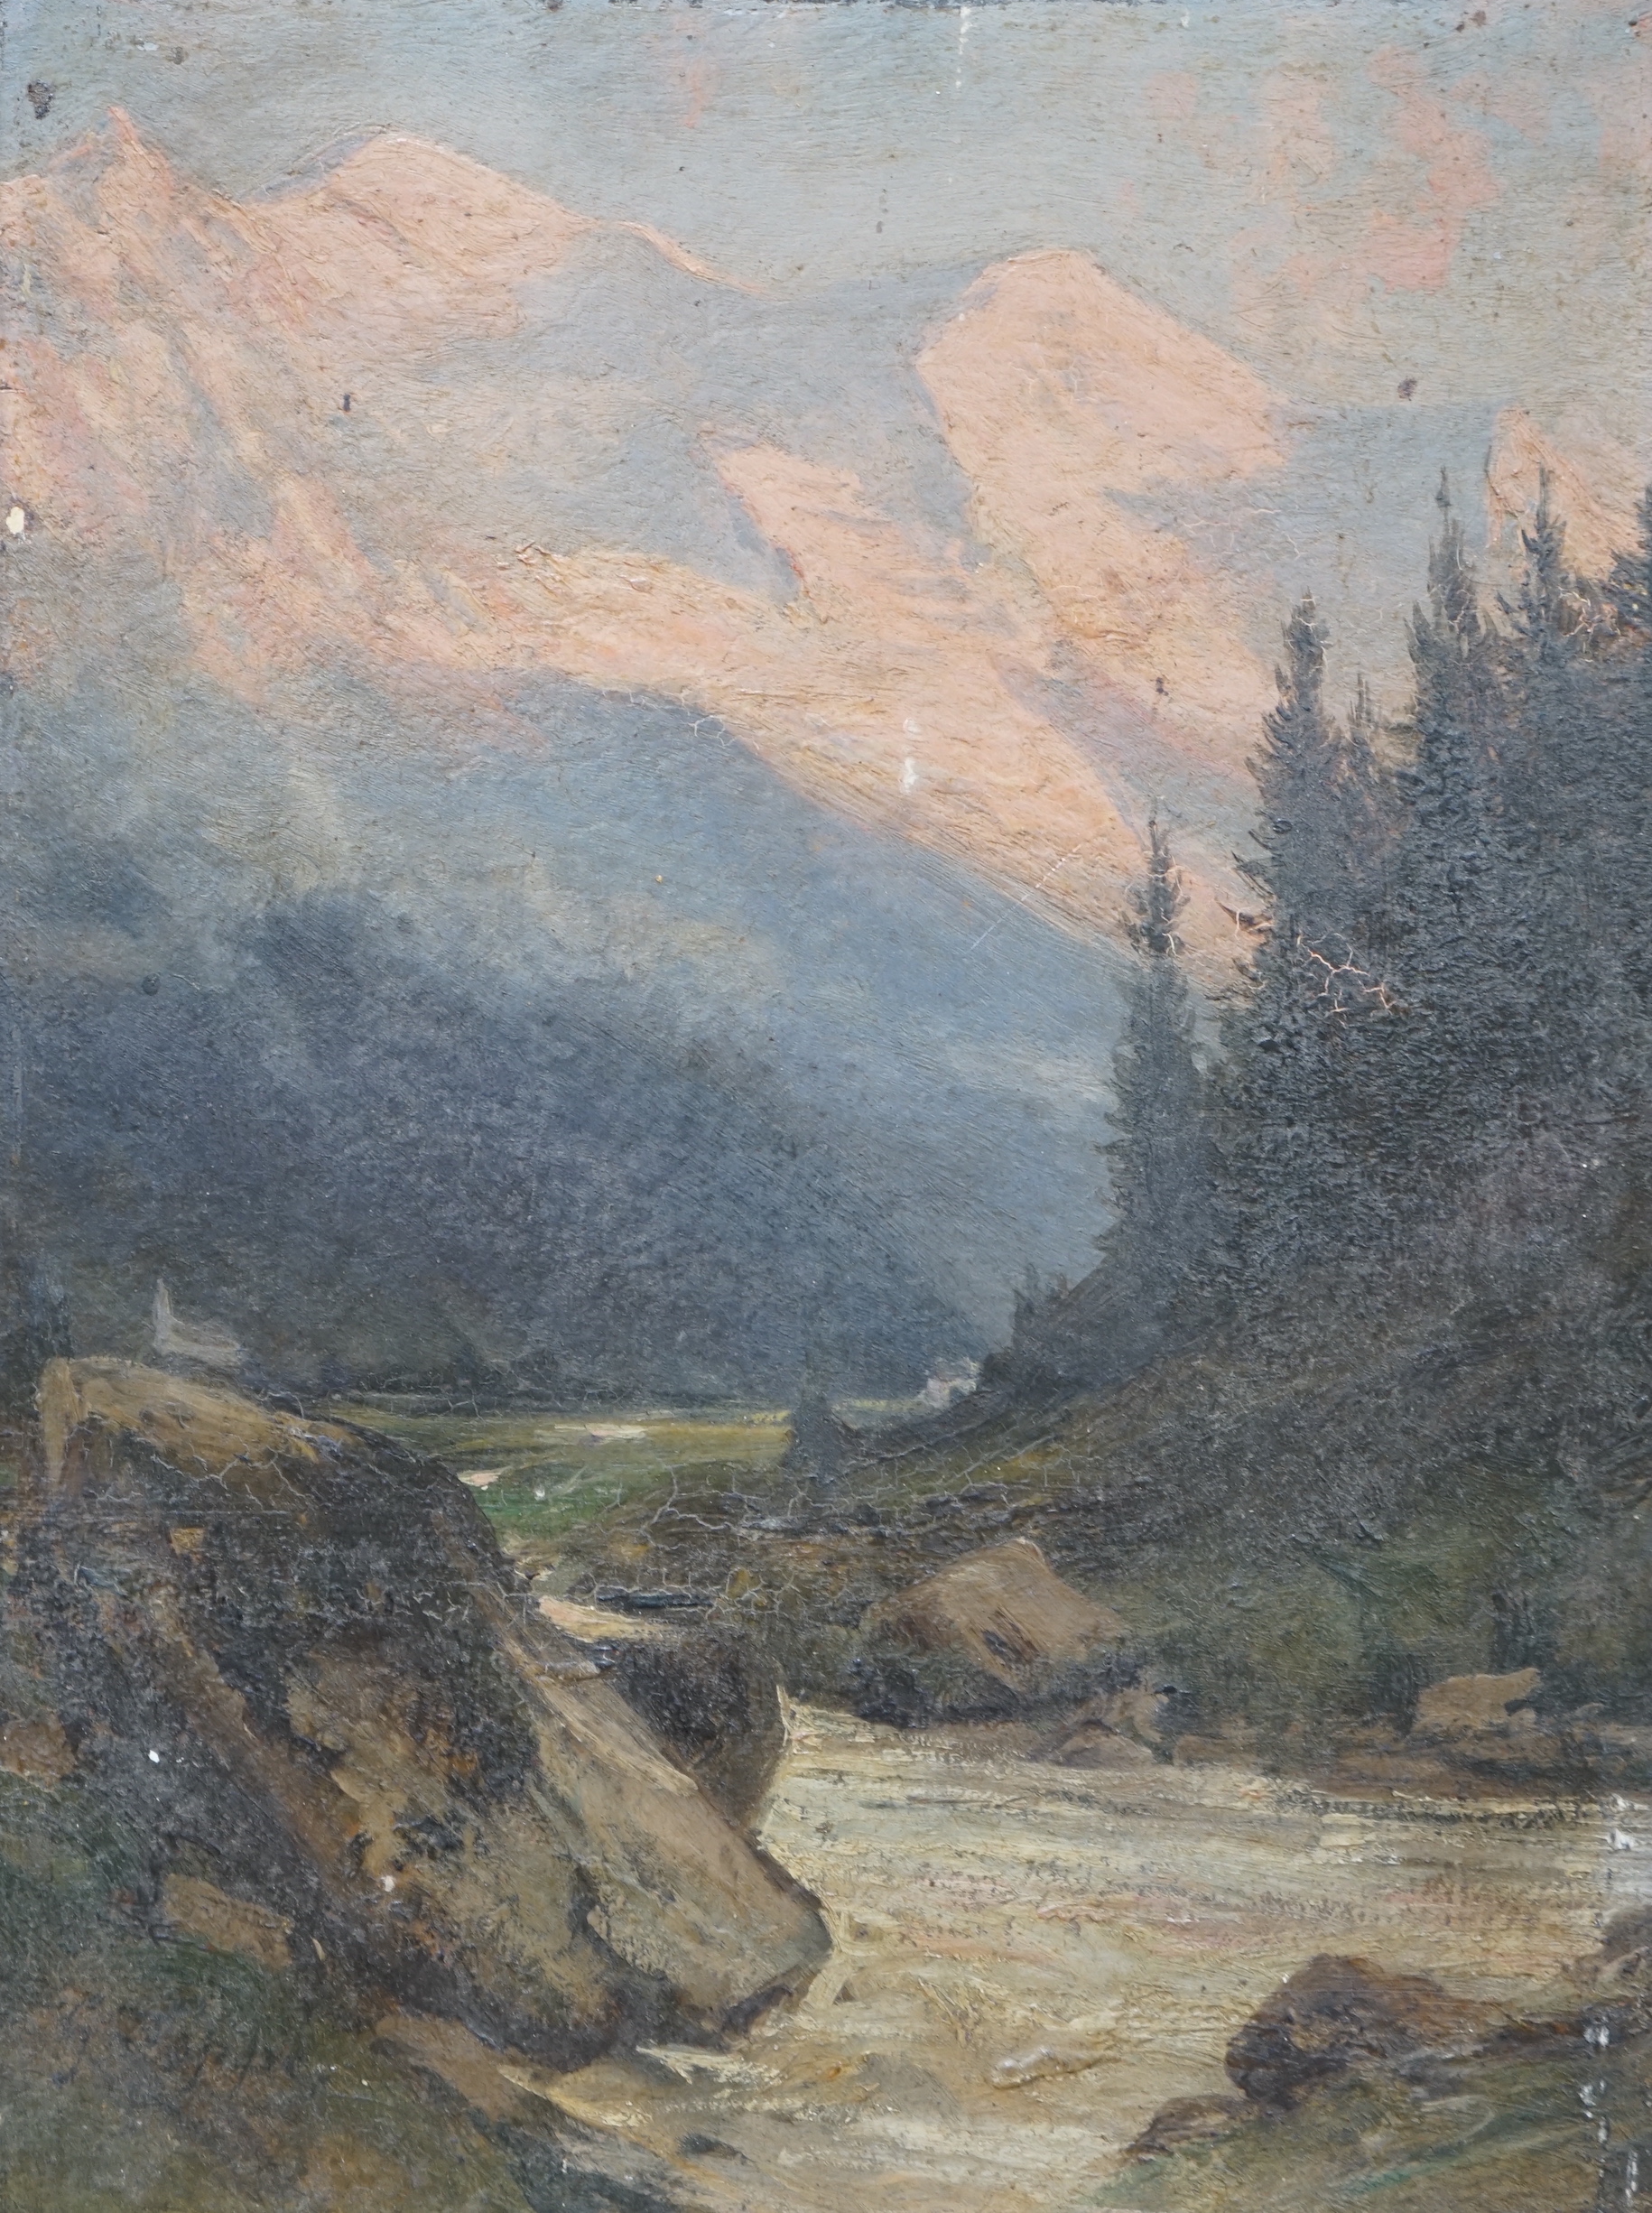 Gabriel Loppé (French, 1825-1913), Mont Blanc from Chamonix, oil on panel, 26 x 19.5cm, unframed